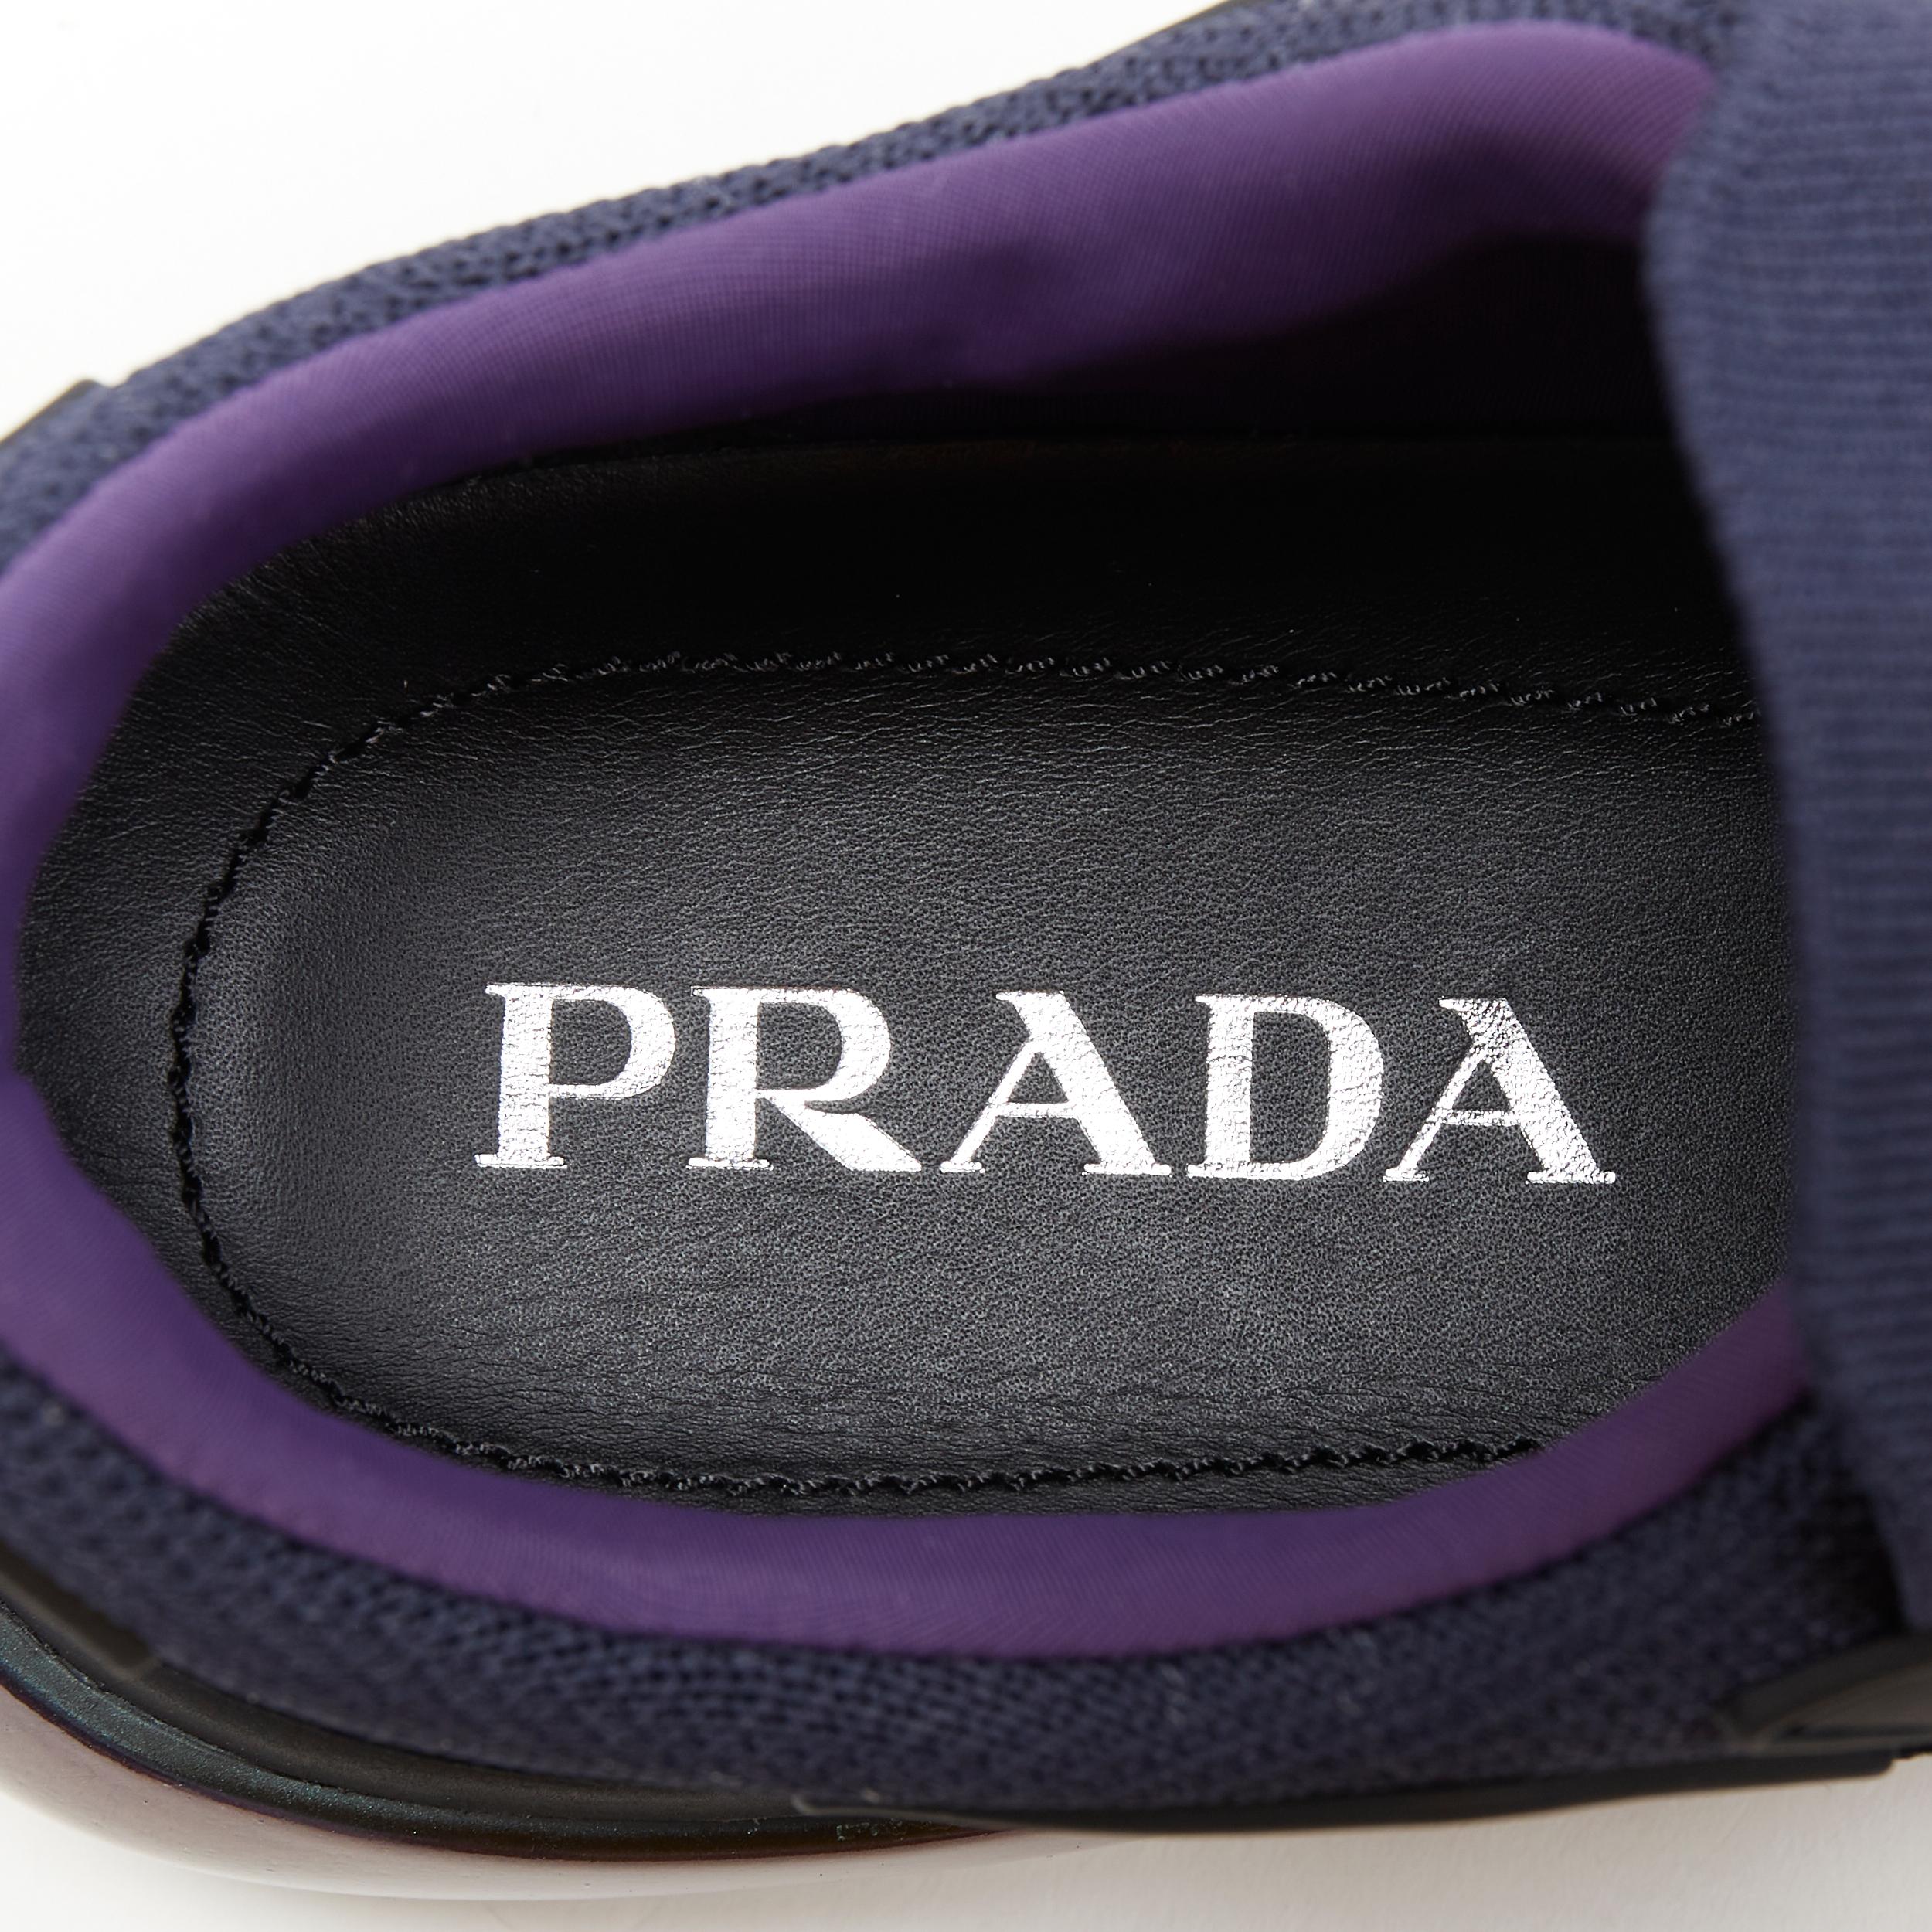 new PRADA 2018 Cloudbust iridescent navy blue rubber low sneaker UK8.5 EU41.5 3